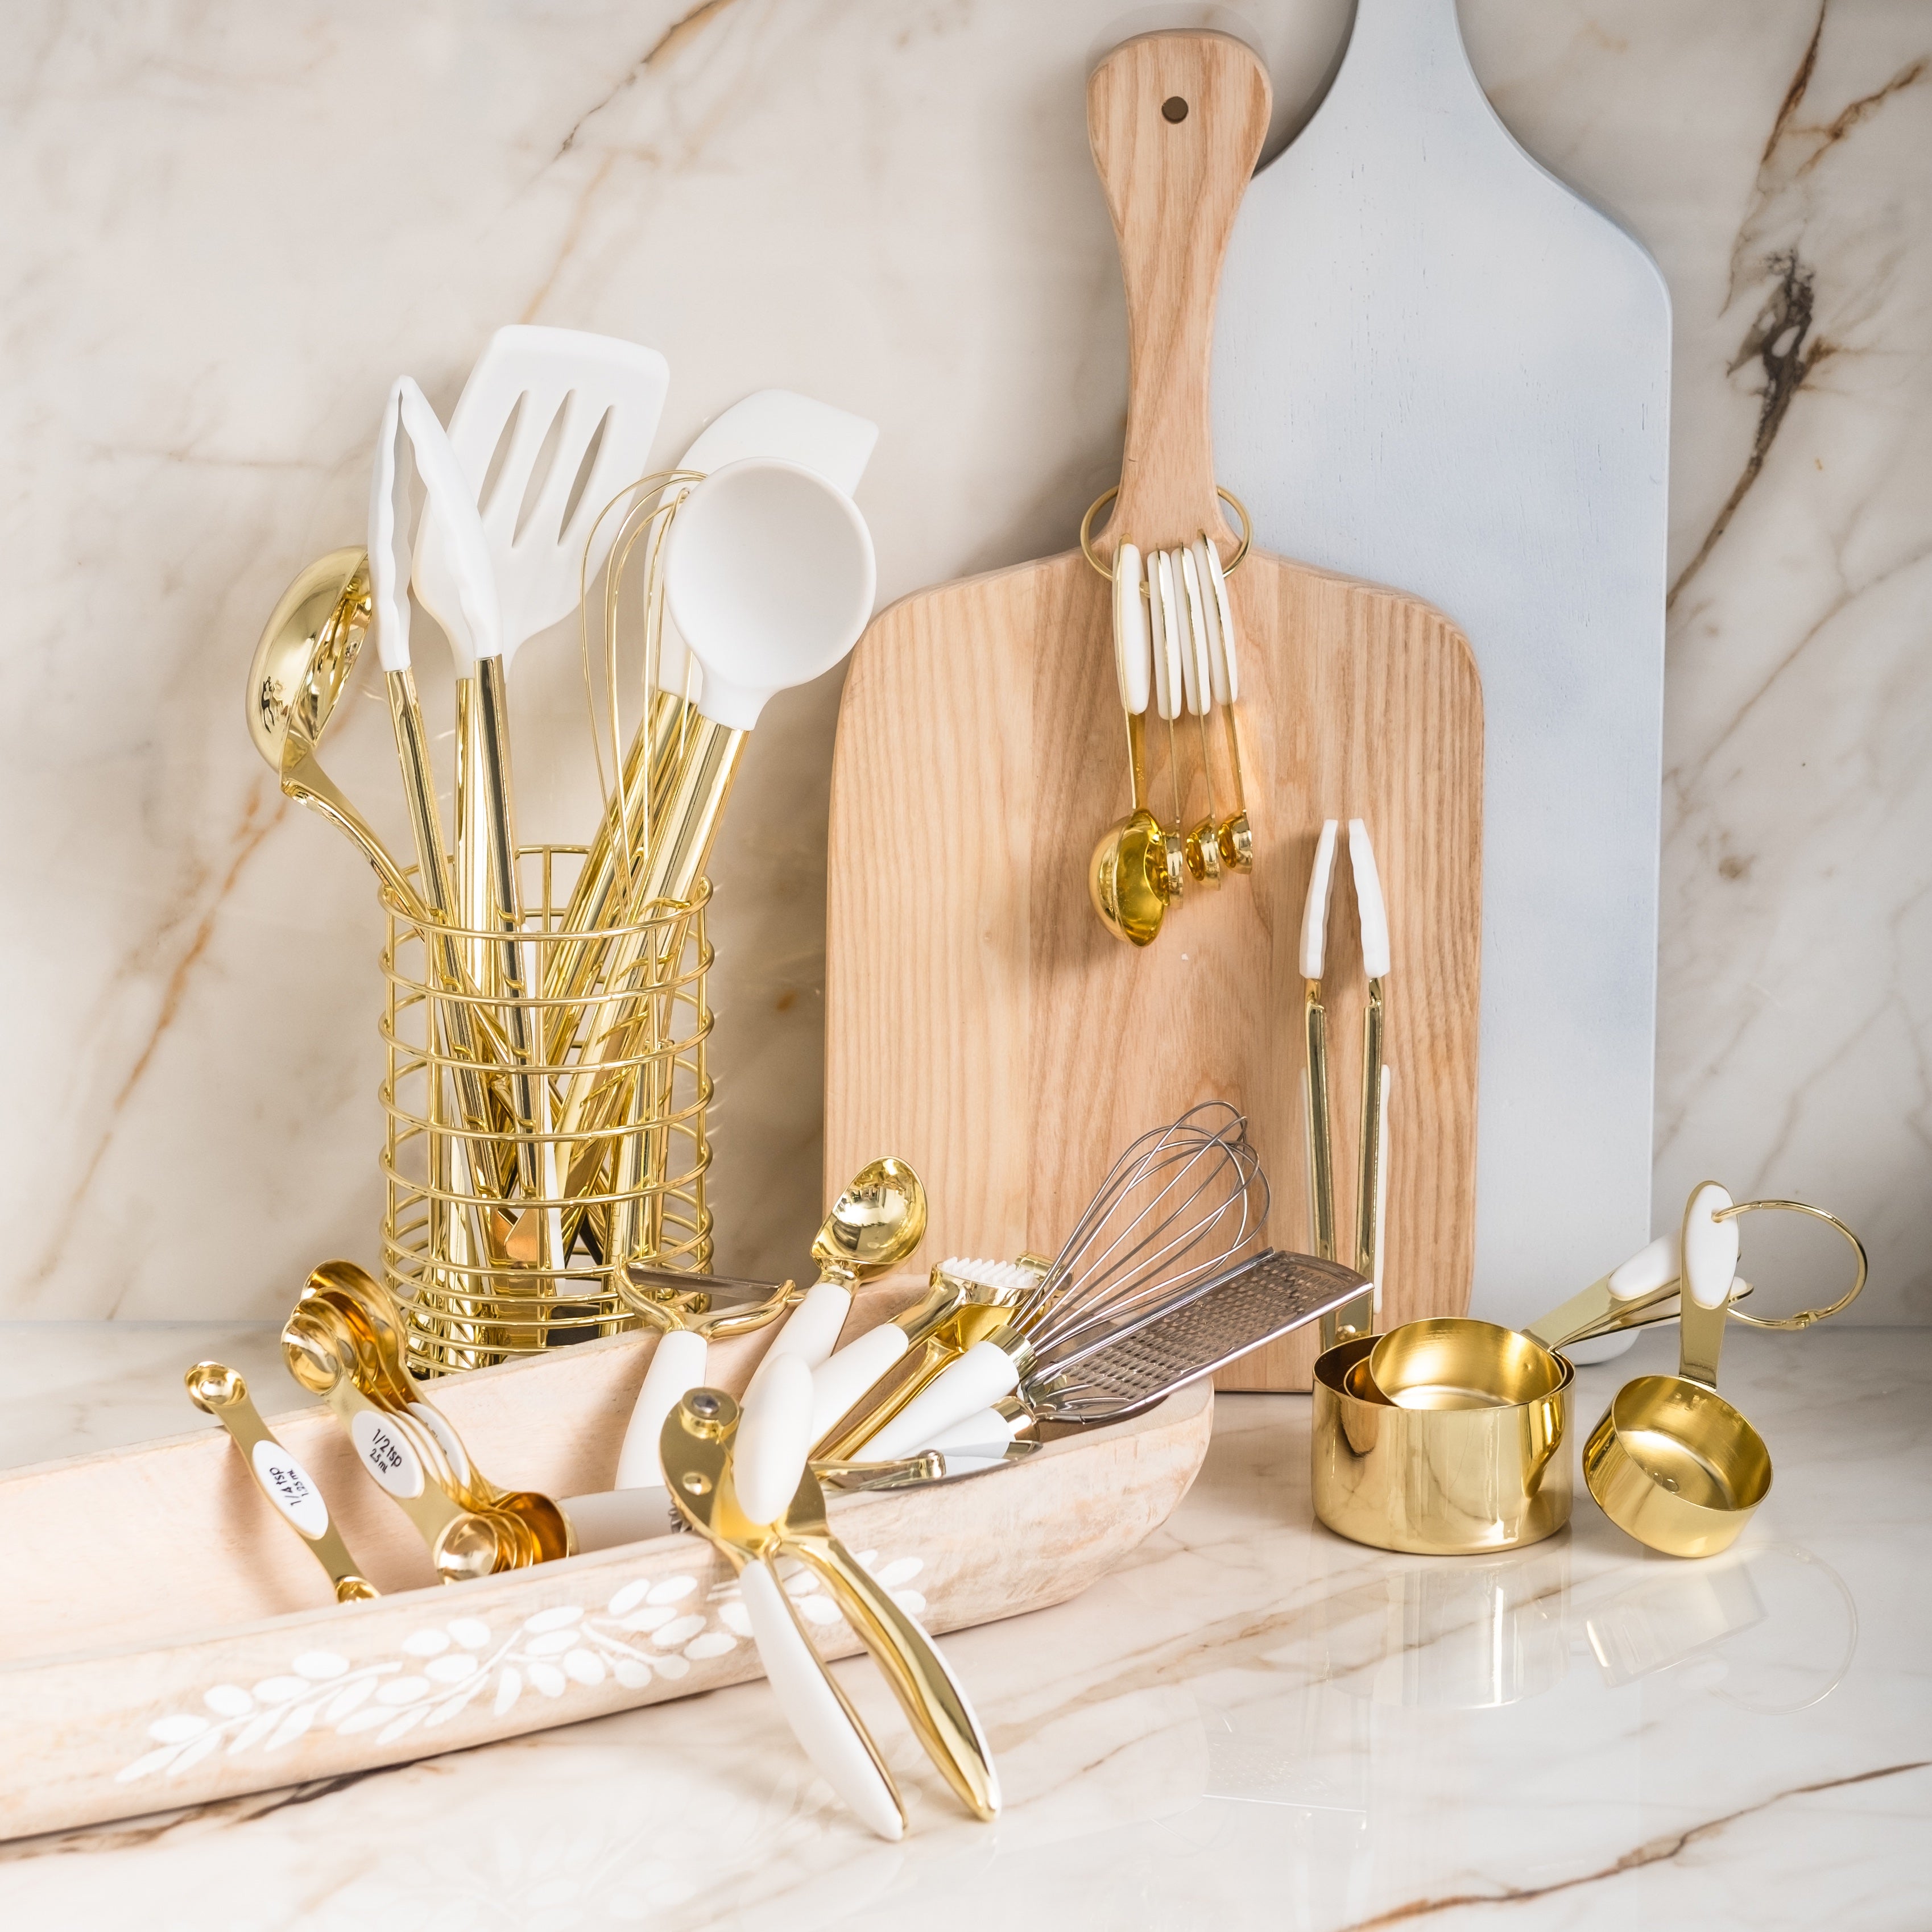 White and Light Gold Kitchen Utensils Set with Holder